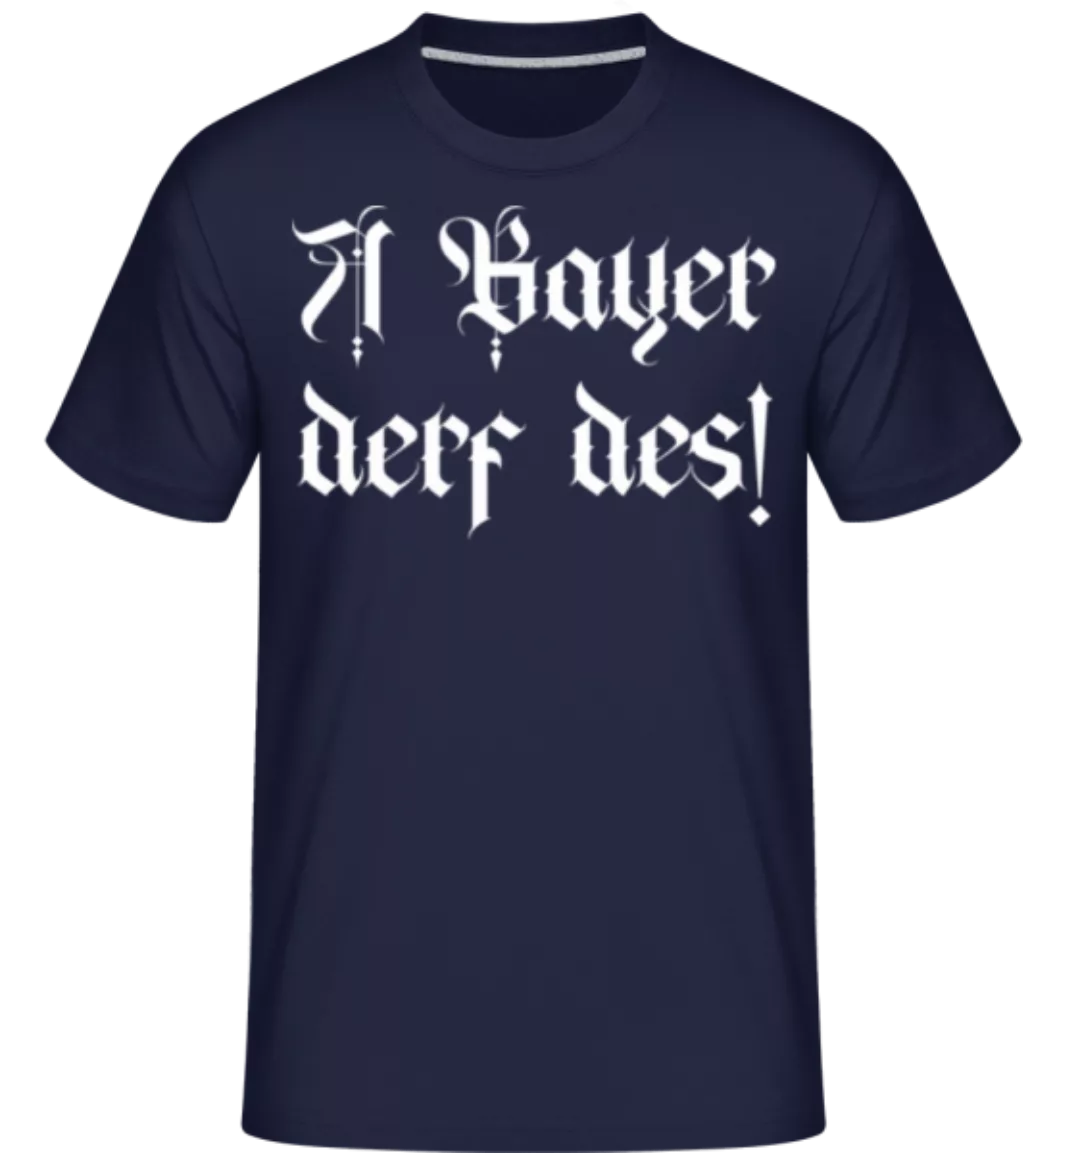 A Bayer Derf Des! · Shirtinator Männer T-Shirt günstig online kaufen